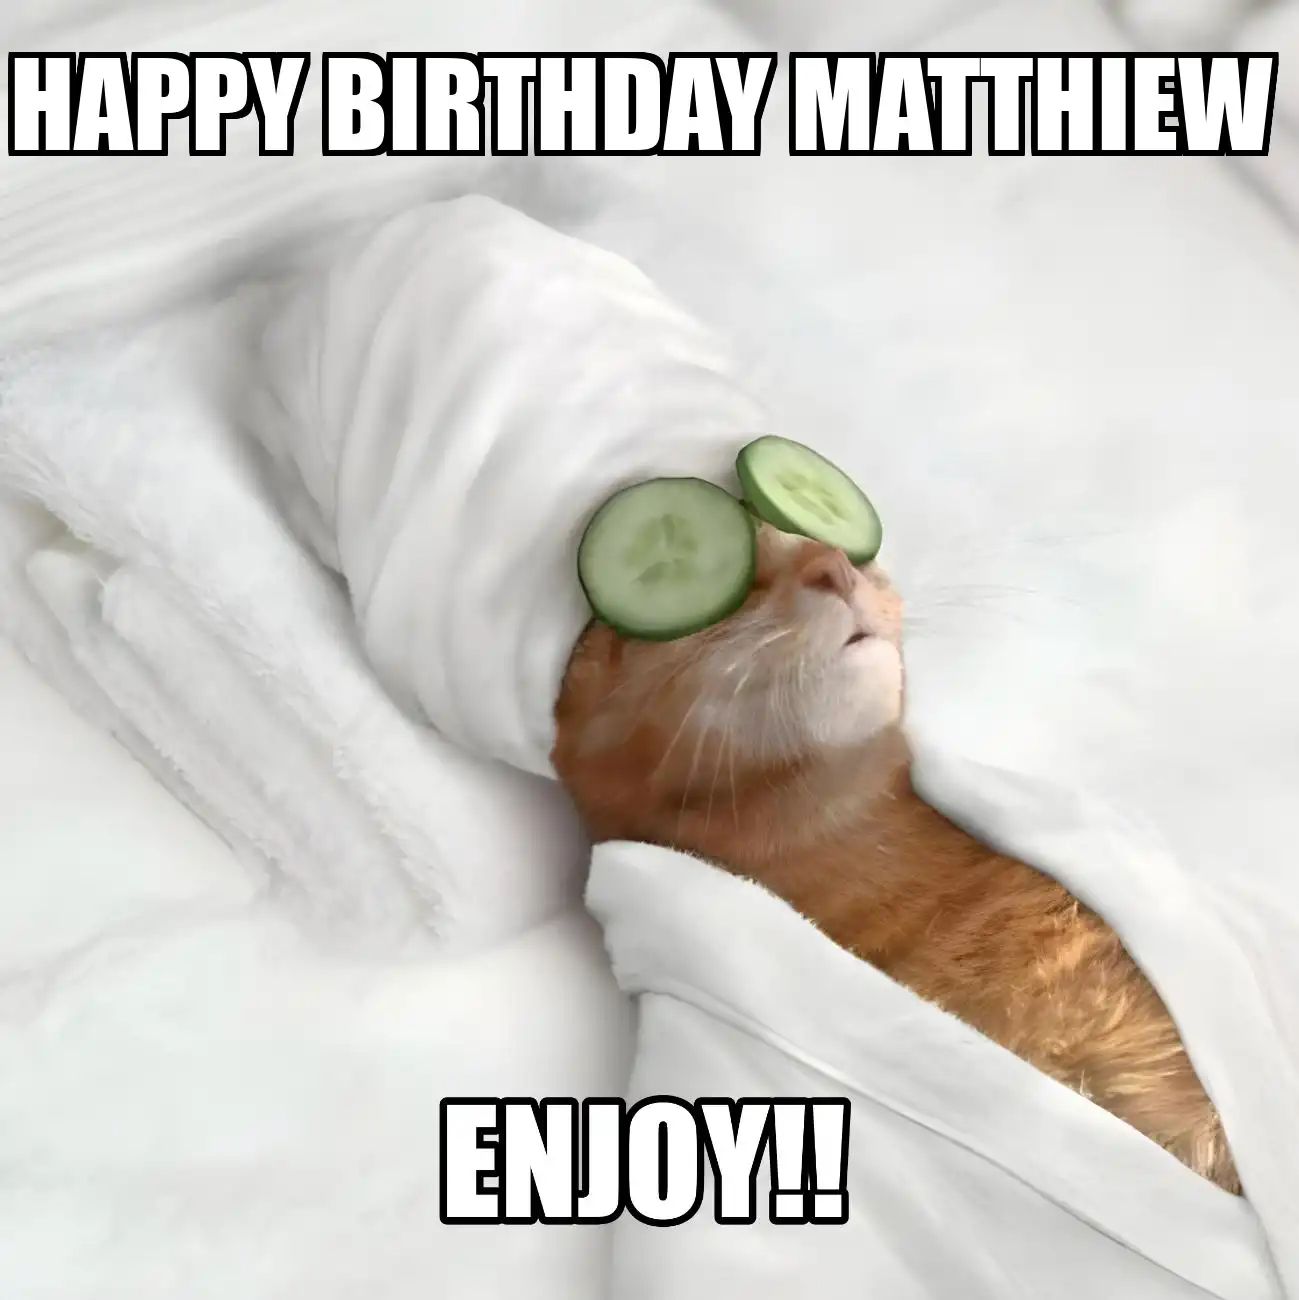 Happy Birthday Matthiew Enjoy Cat Meme